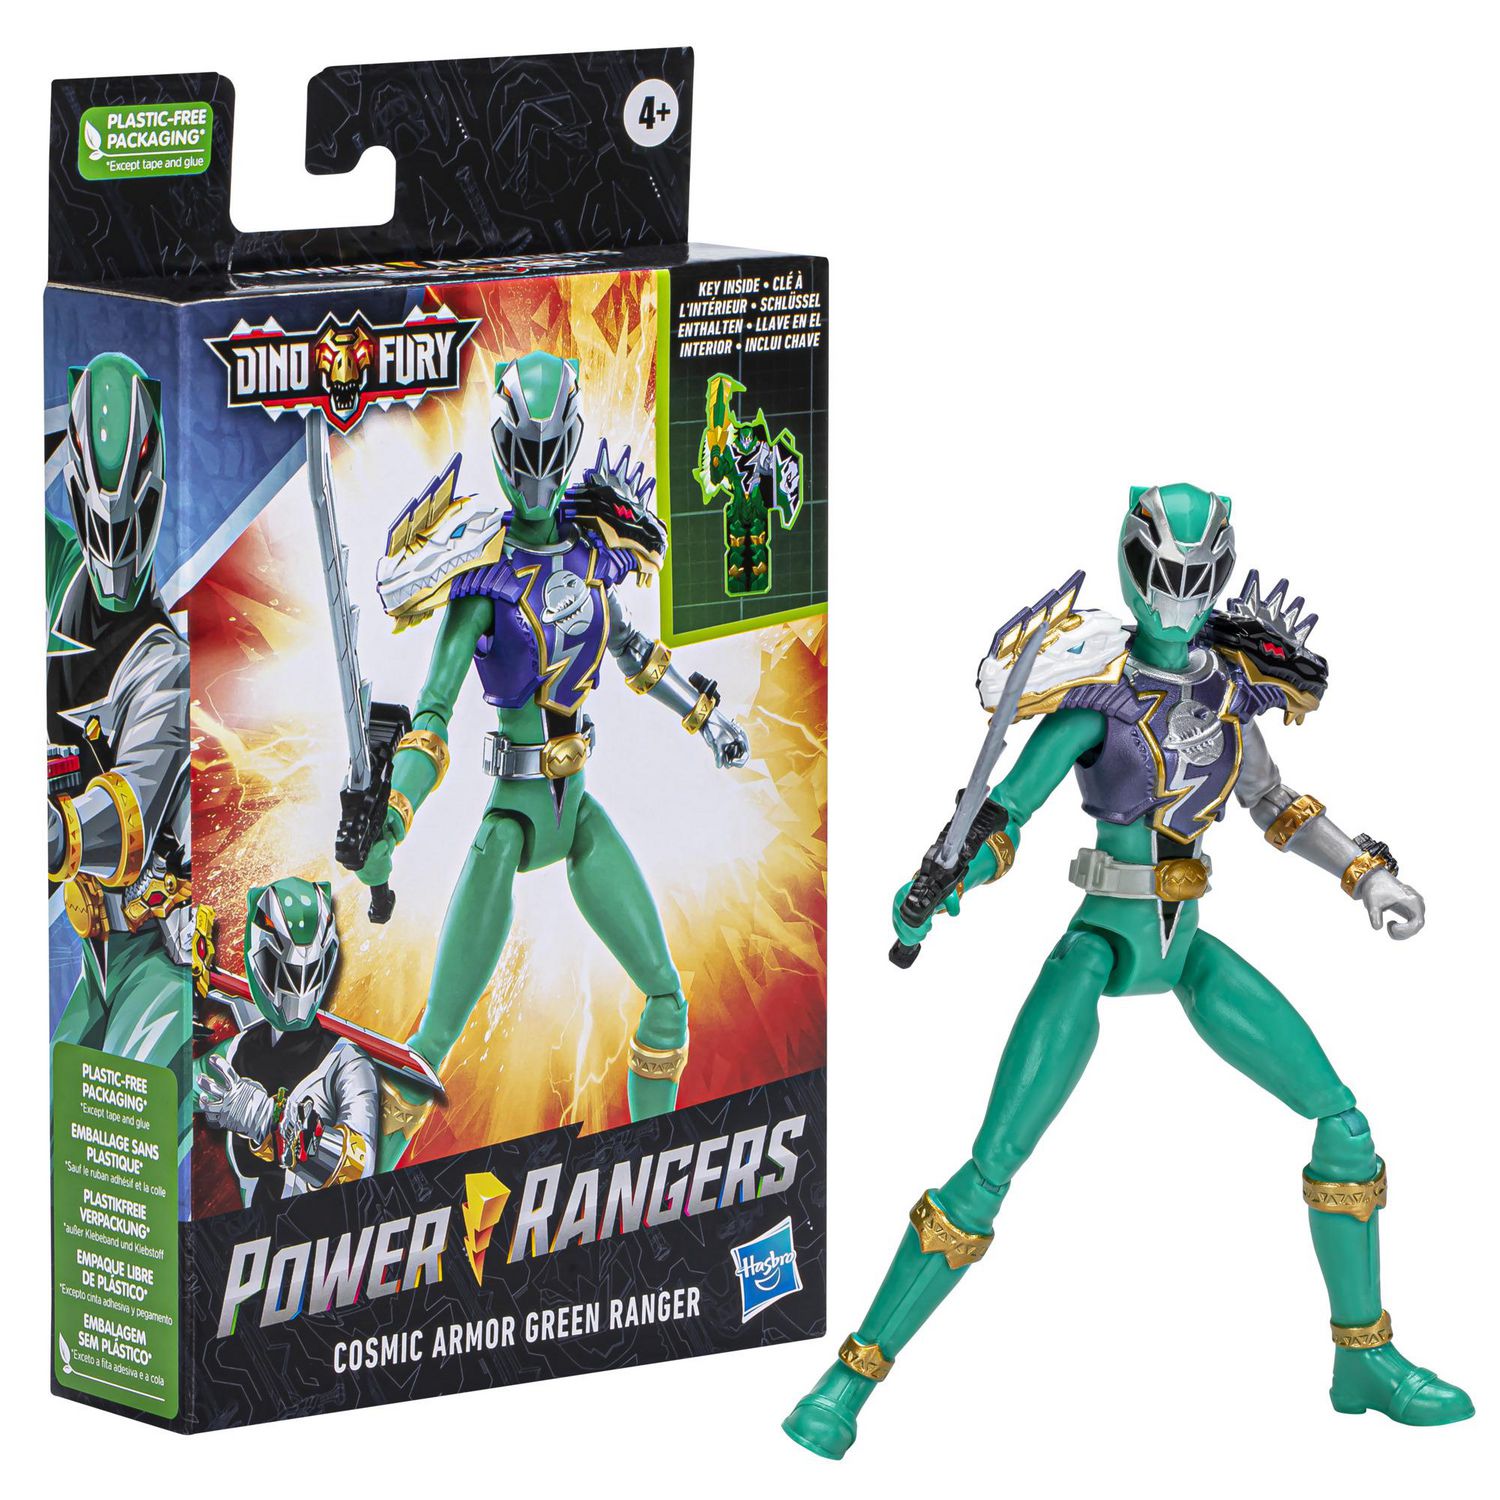 Power Rangers Dino Fury Cosmic Armor Green Ranger, 6-Inch Power